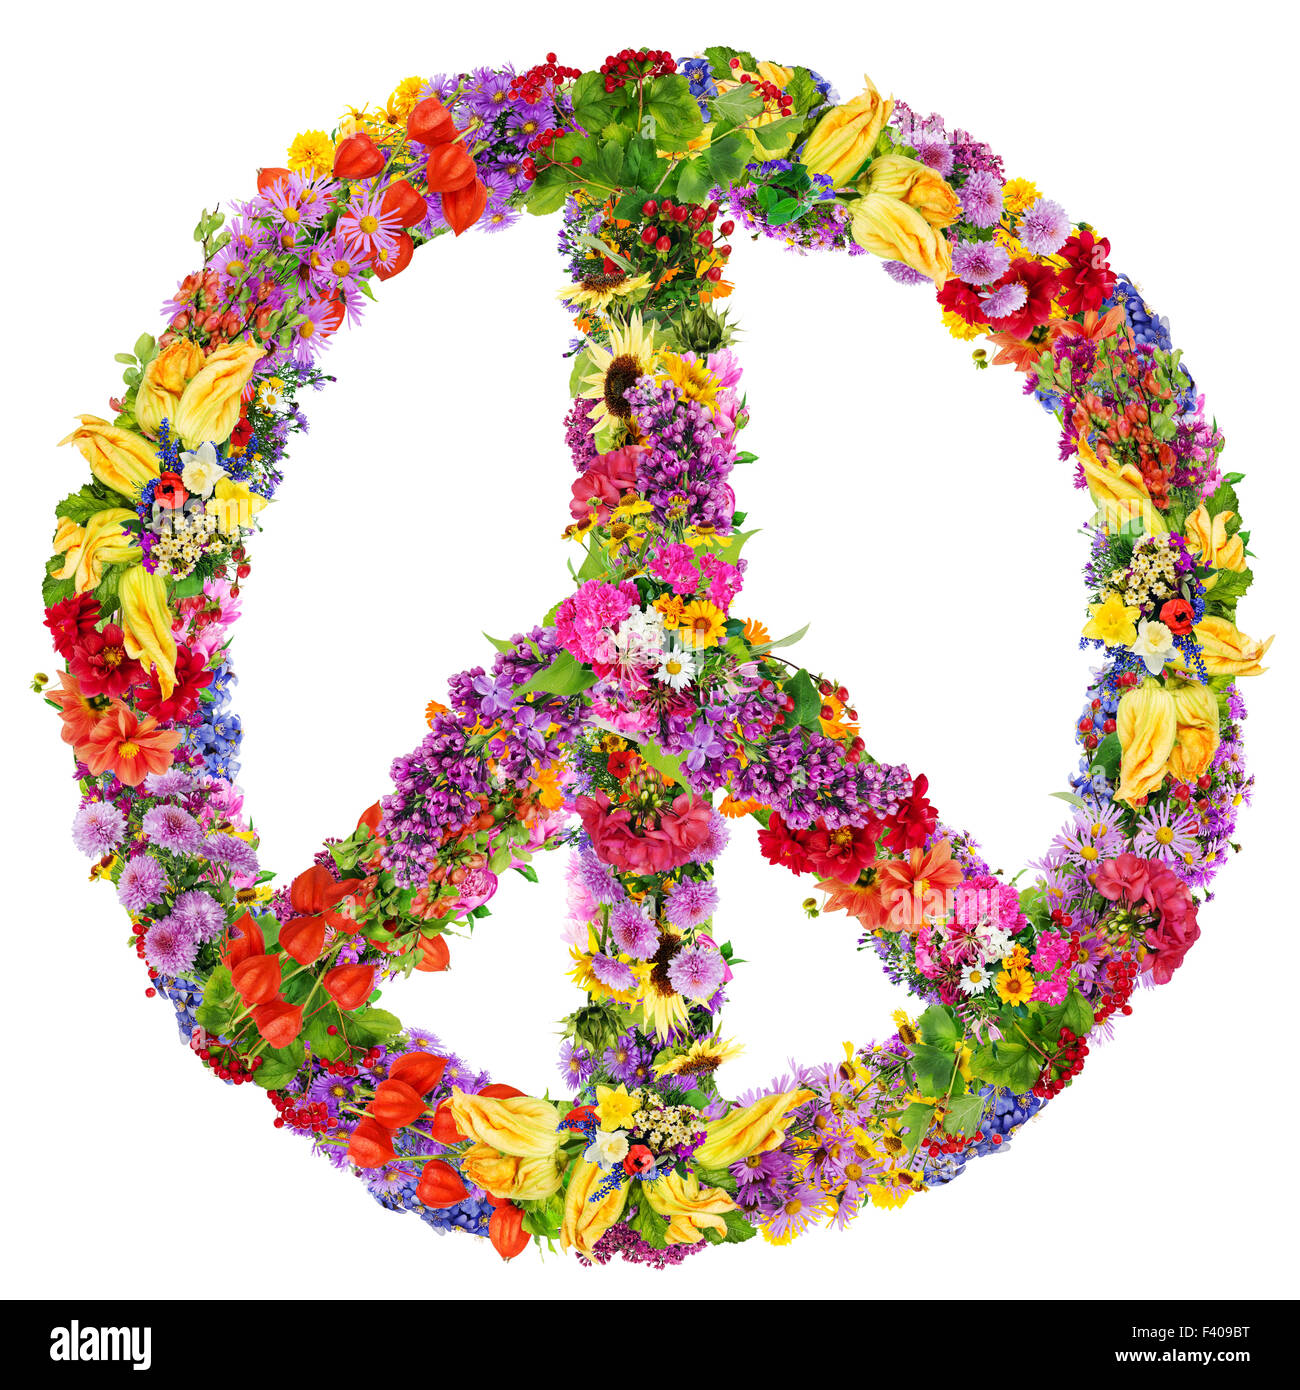 Peace flower symbol Stock Photo